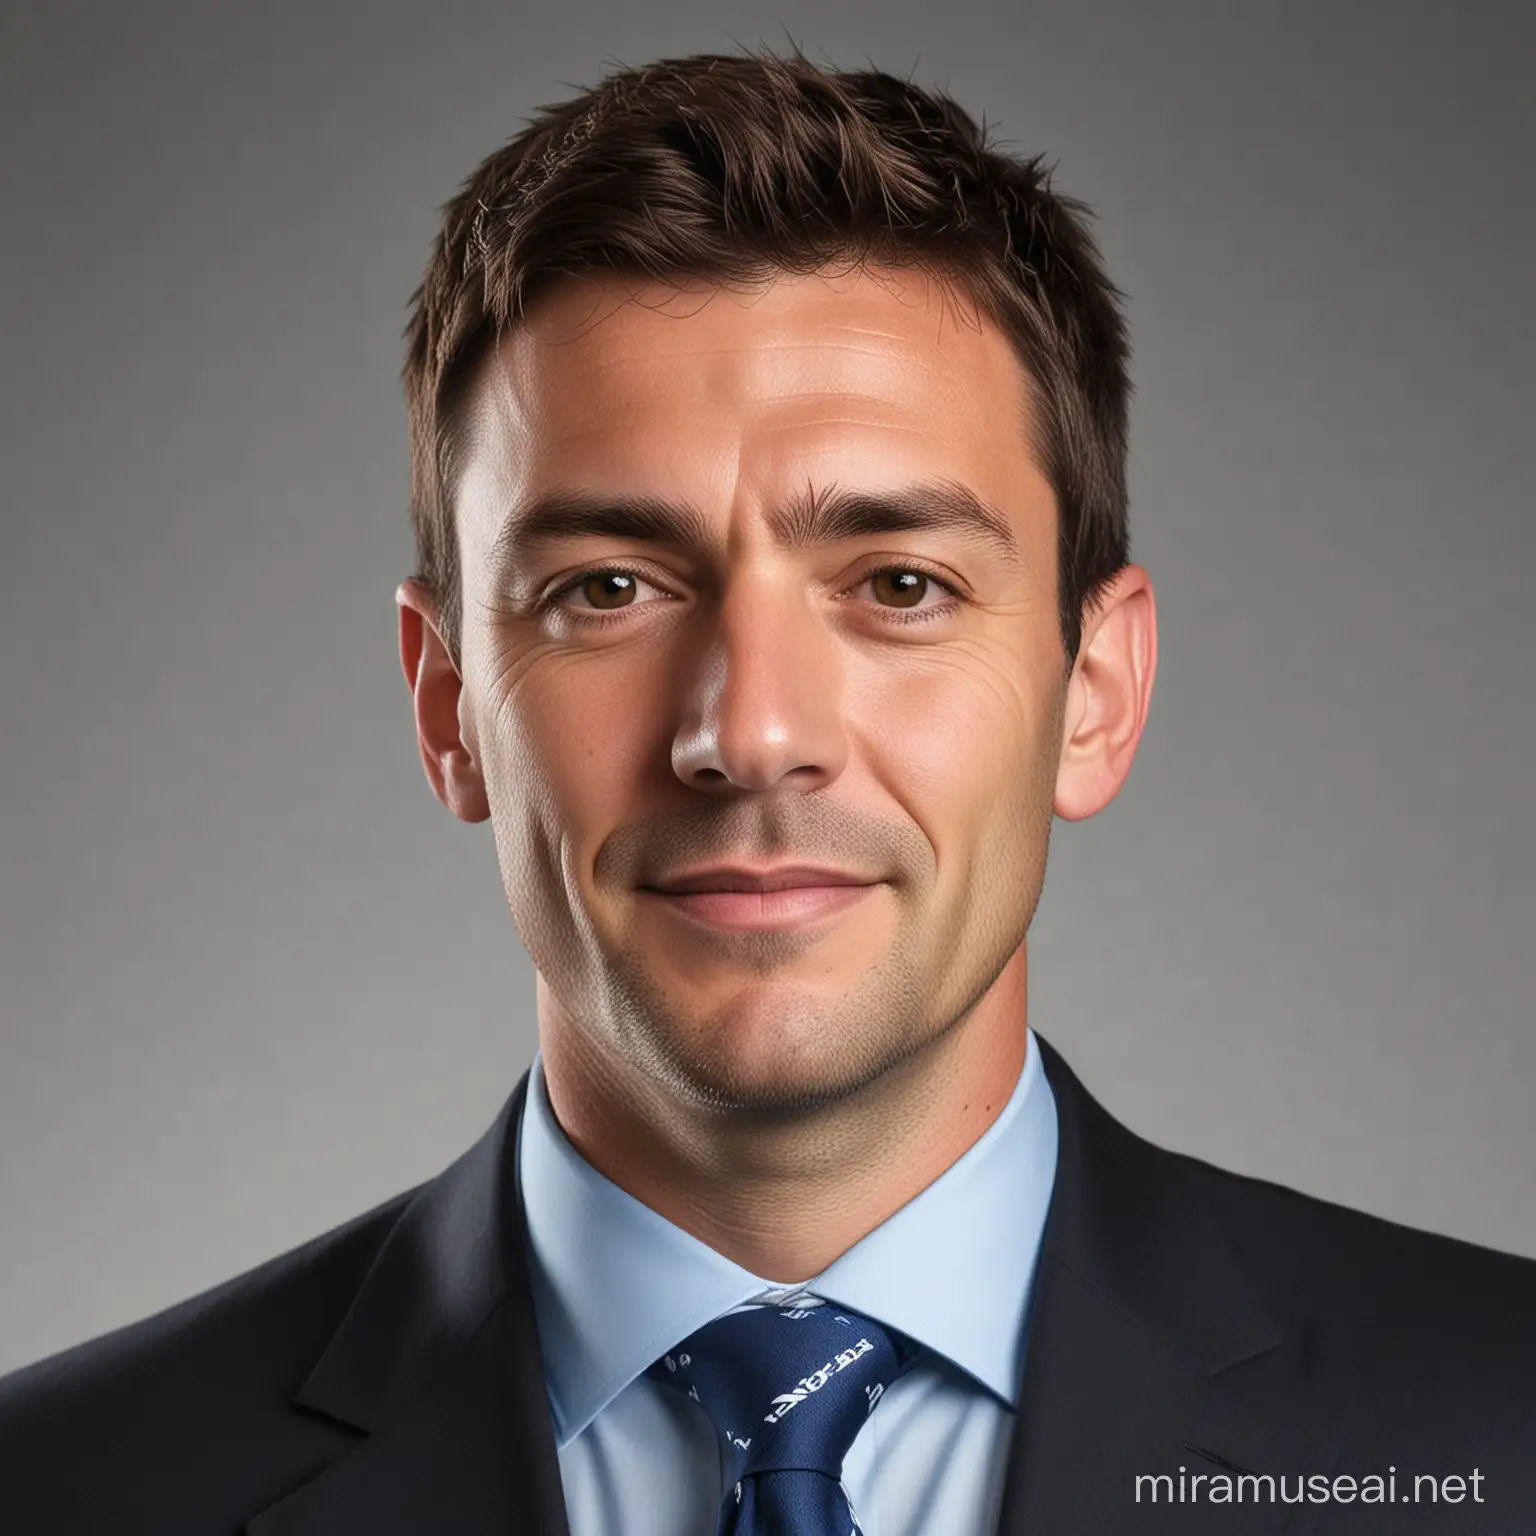 a square linkedin company profile picture of a board member of a premier league club